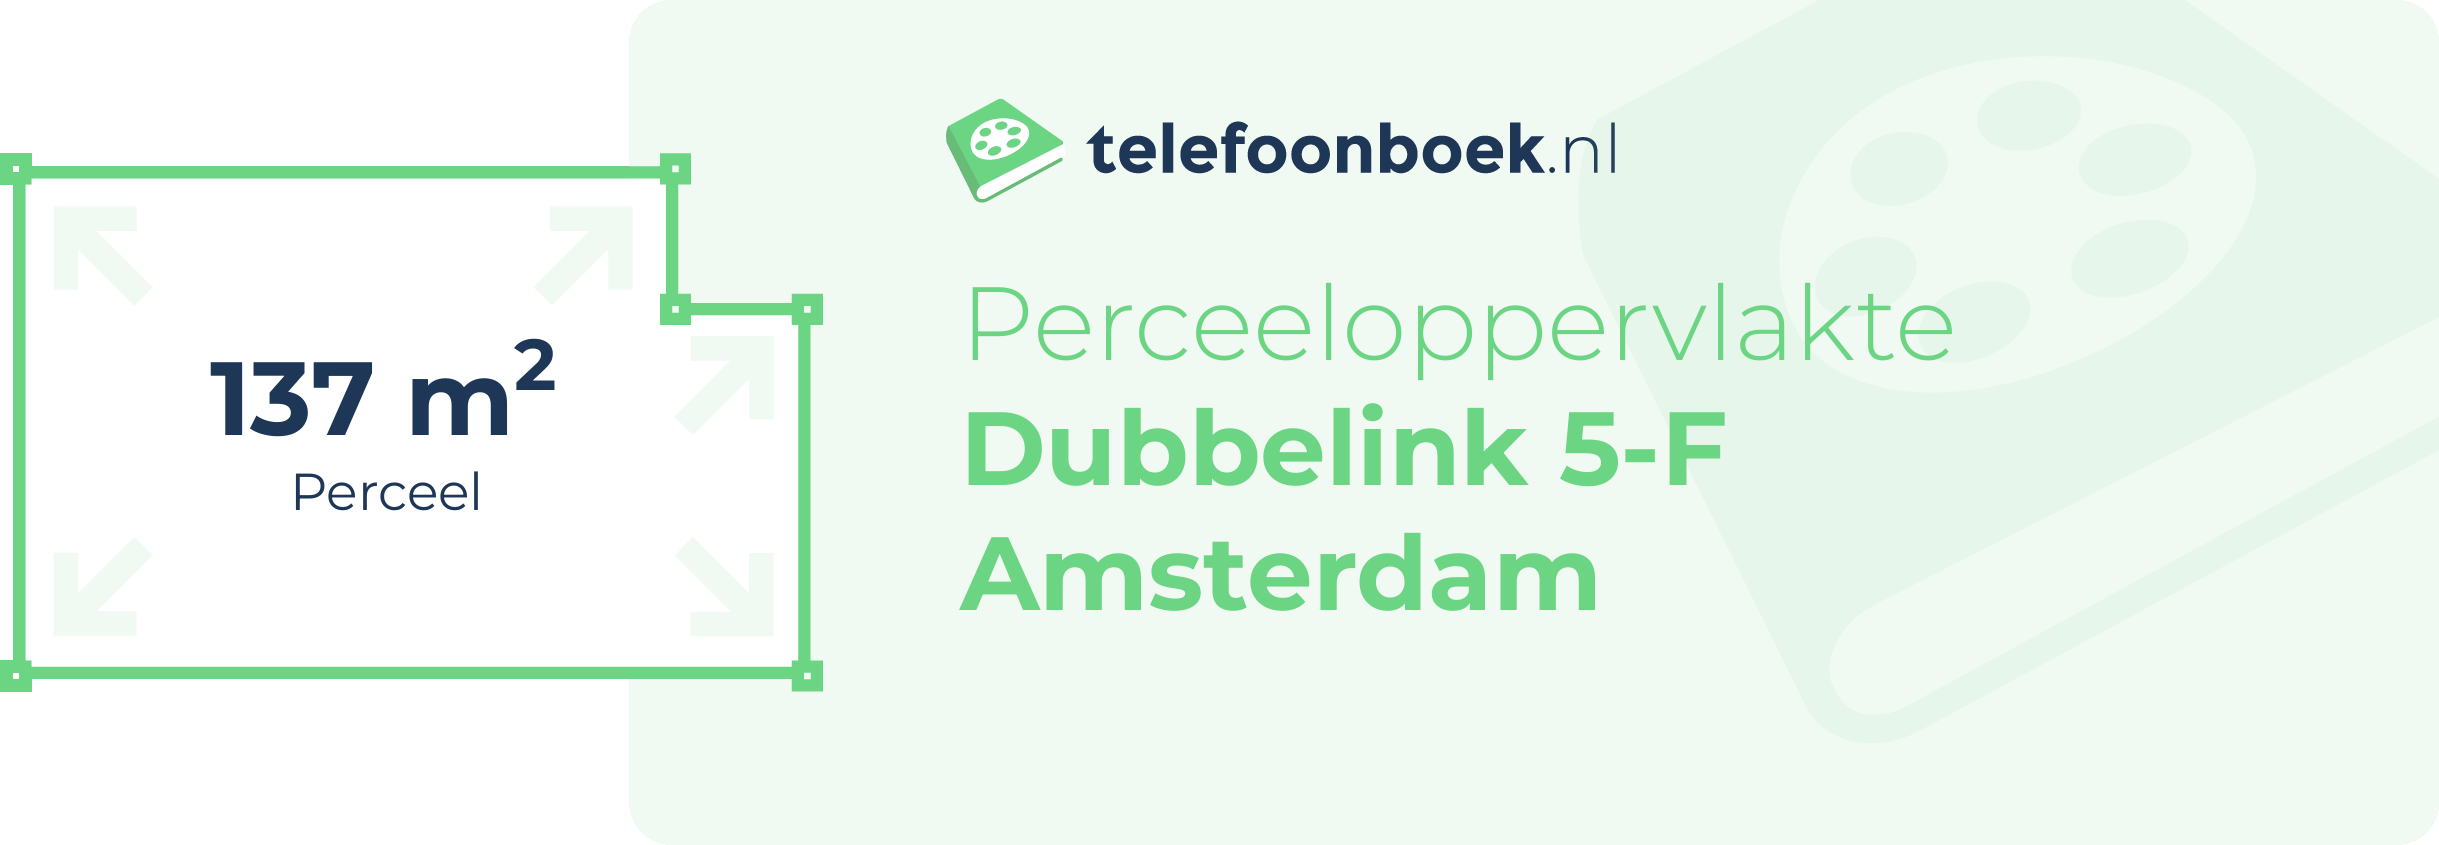 Perceeloppervlakte Dubbelink 5-F Amsterdam